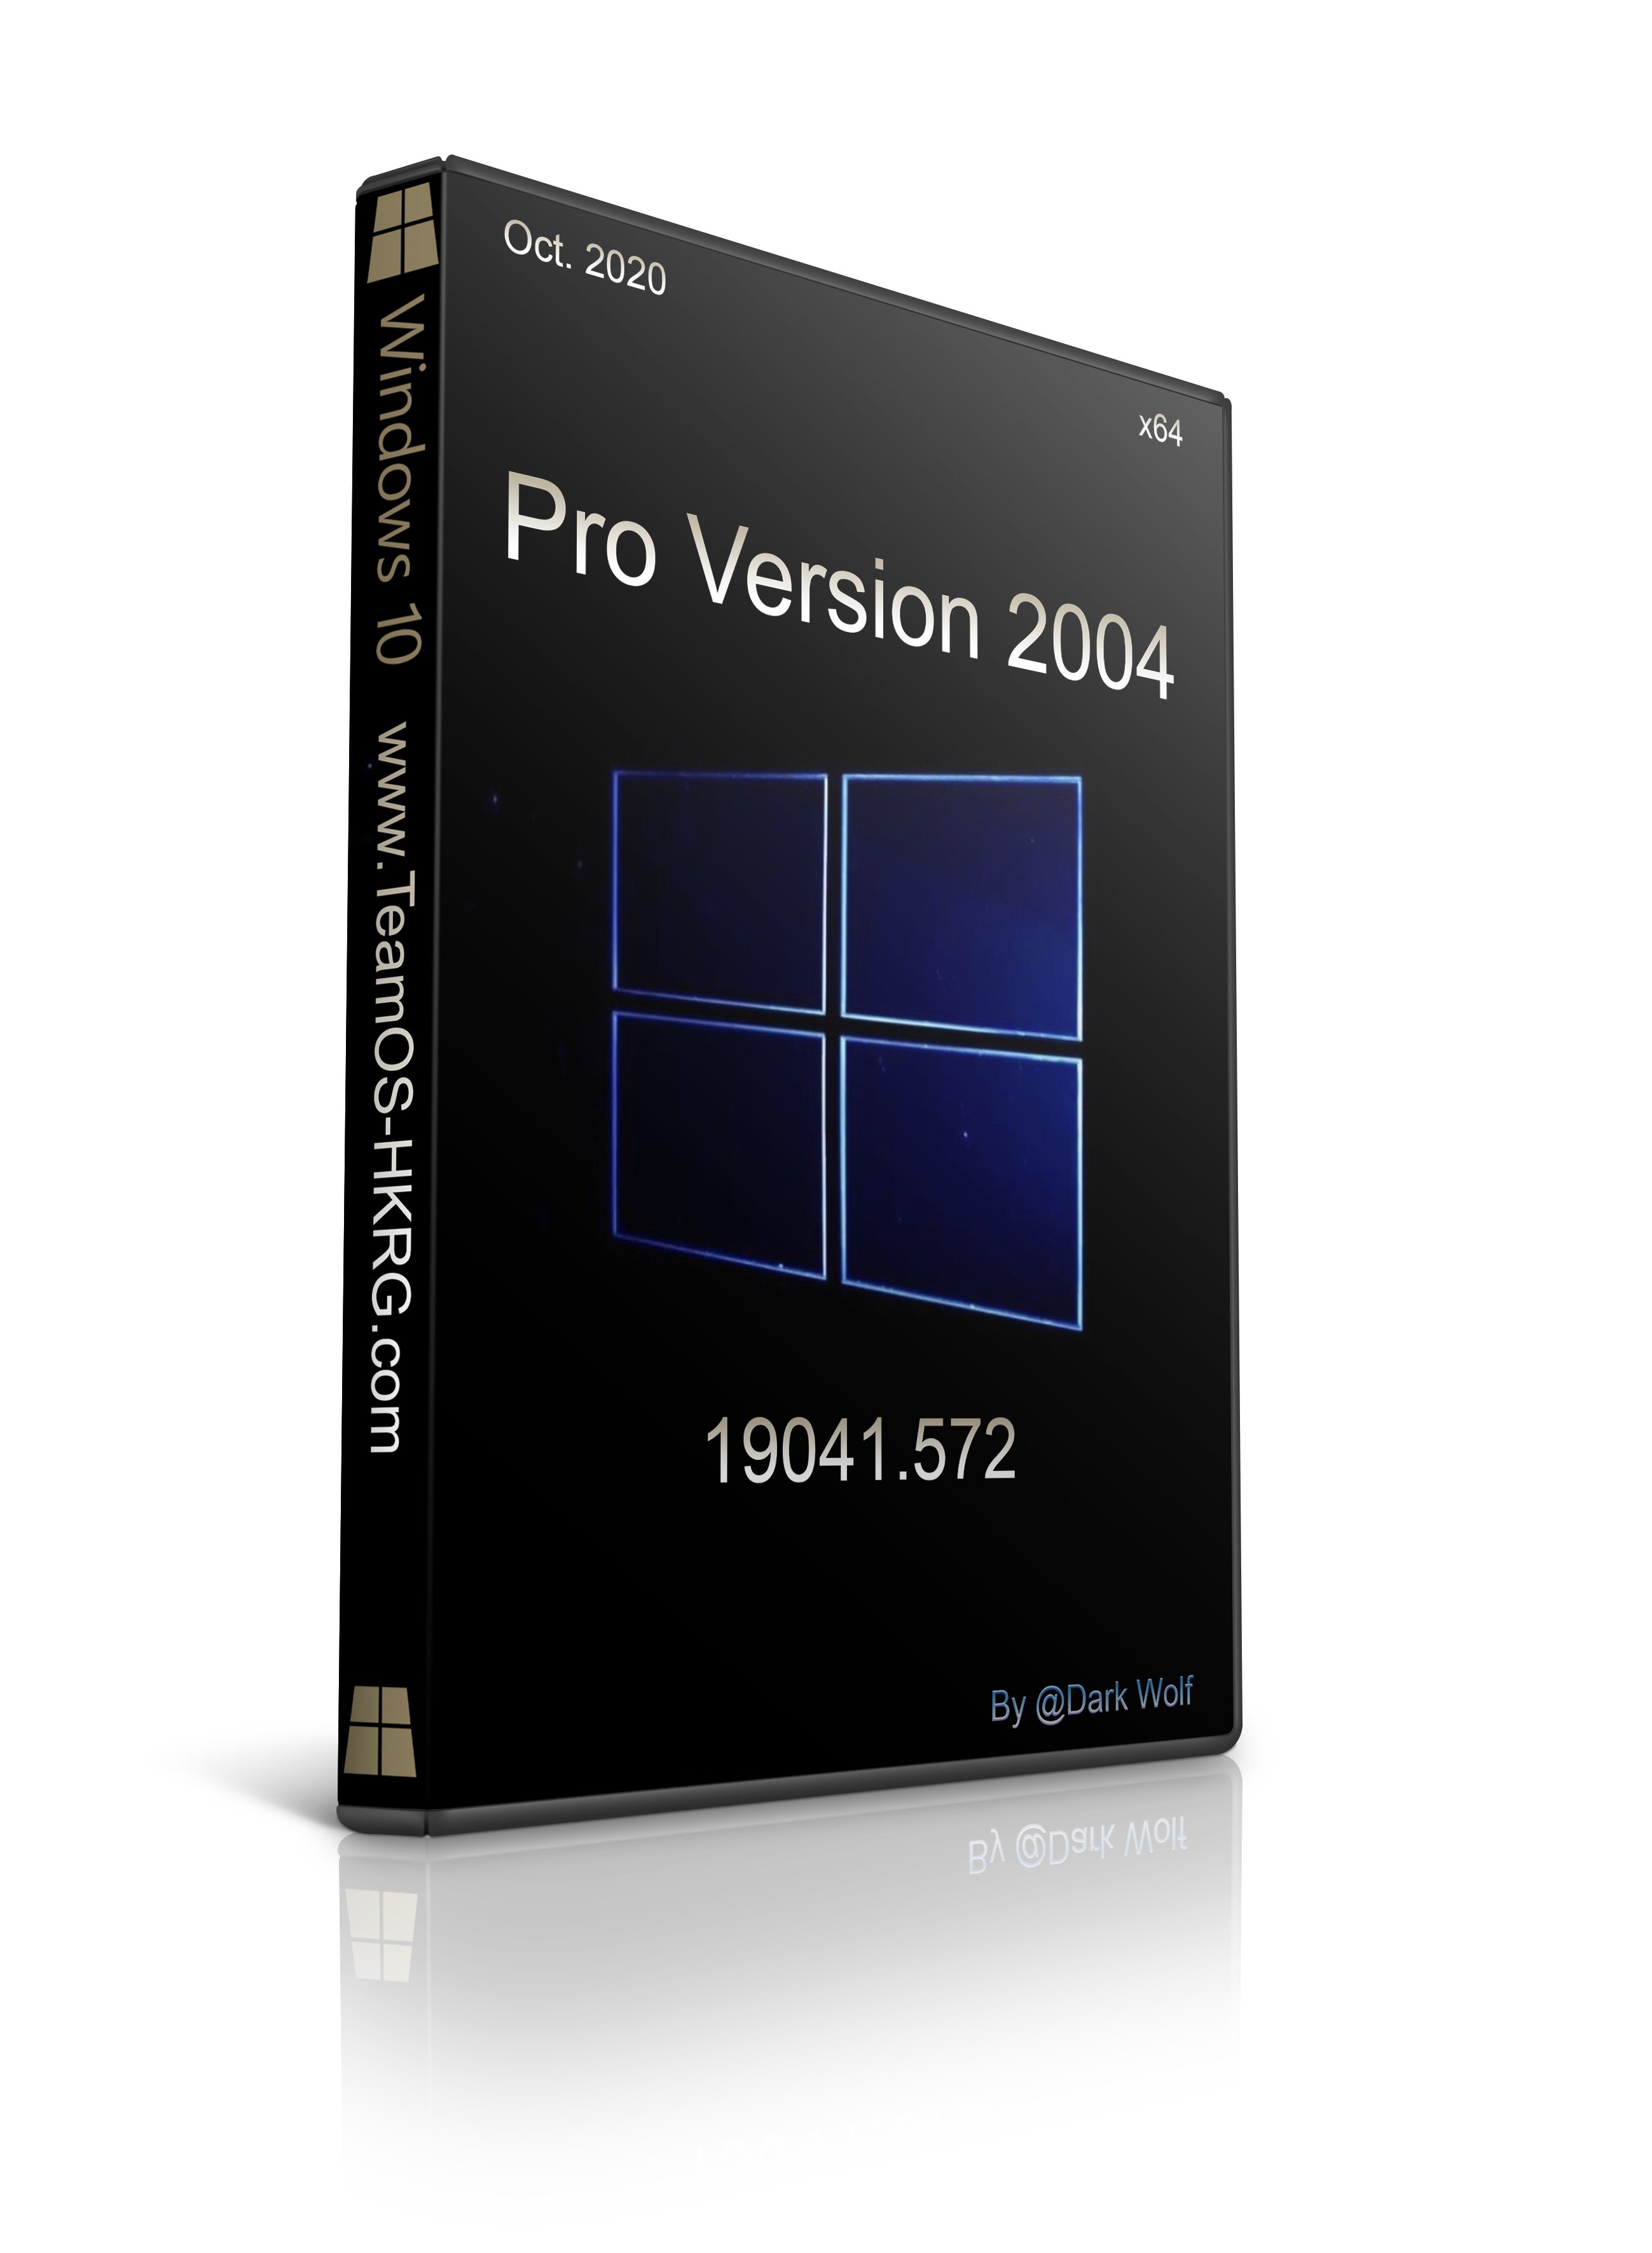 windows 10 pro 2004 download iso 64 bit